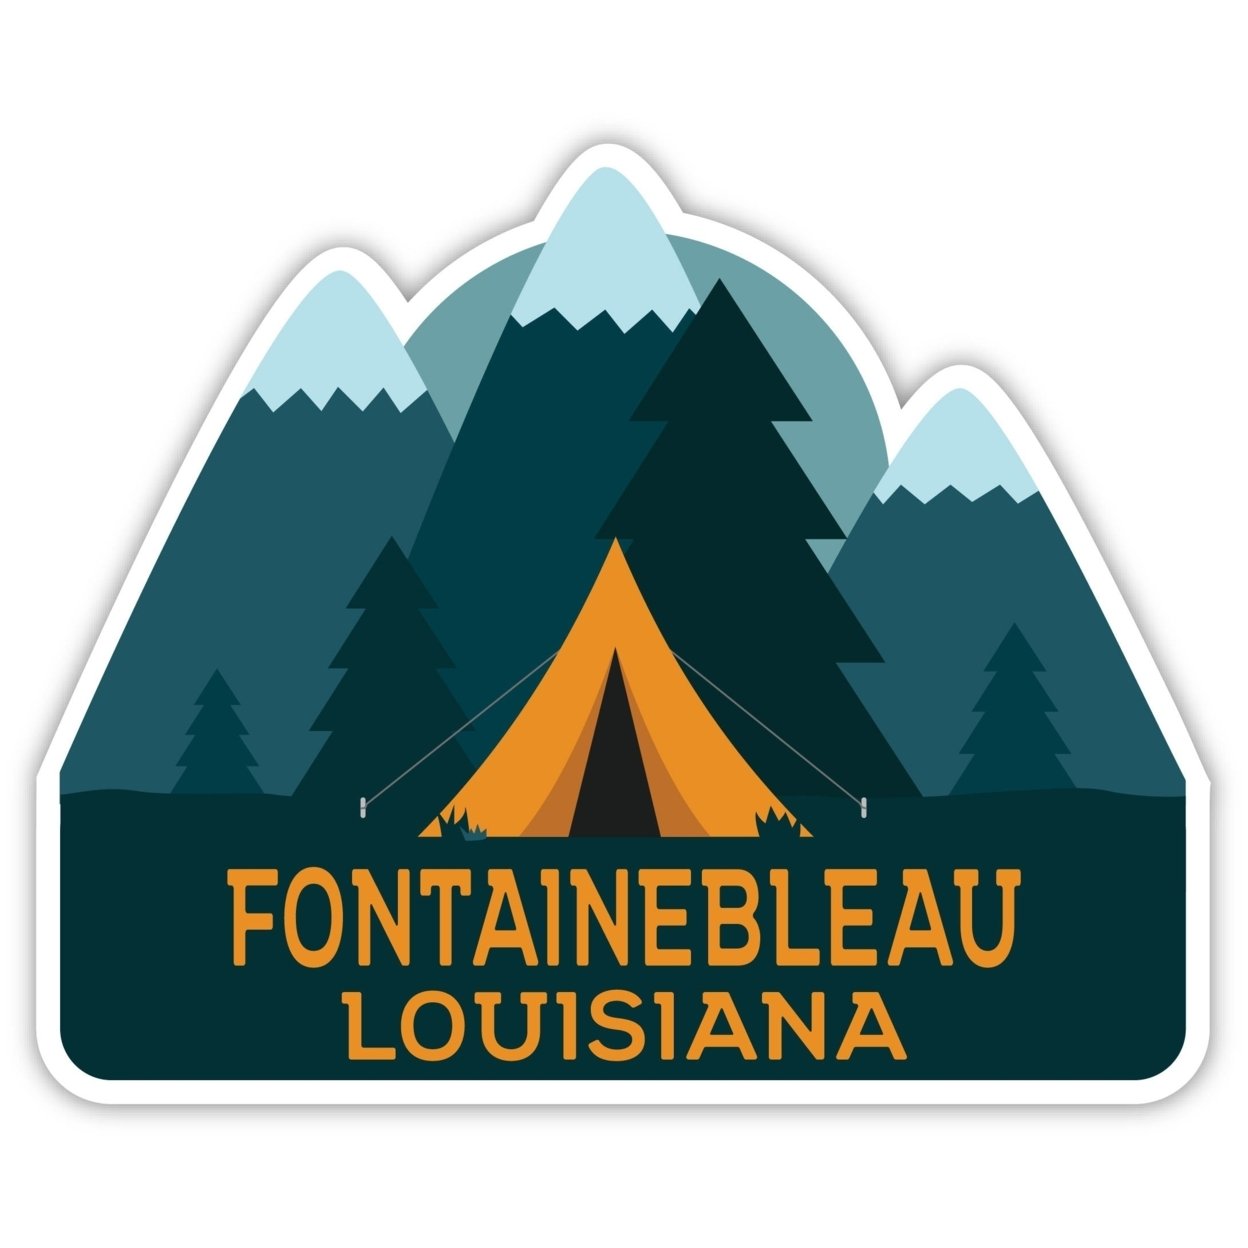 Fontainebleau Louisiana Souvenir Decorative Stickers (Choose Theme And Size) - 4-Pack, 4-Inch, Tent